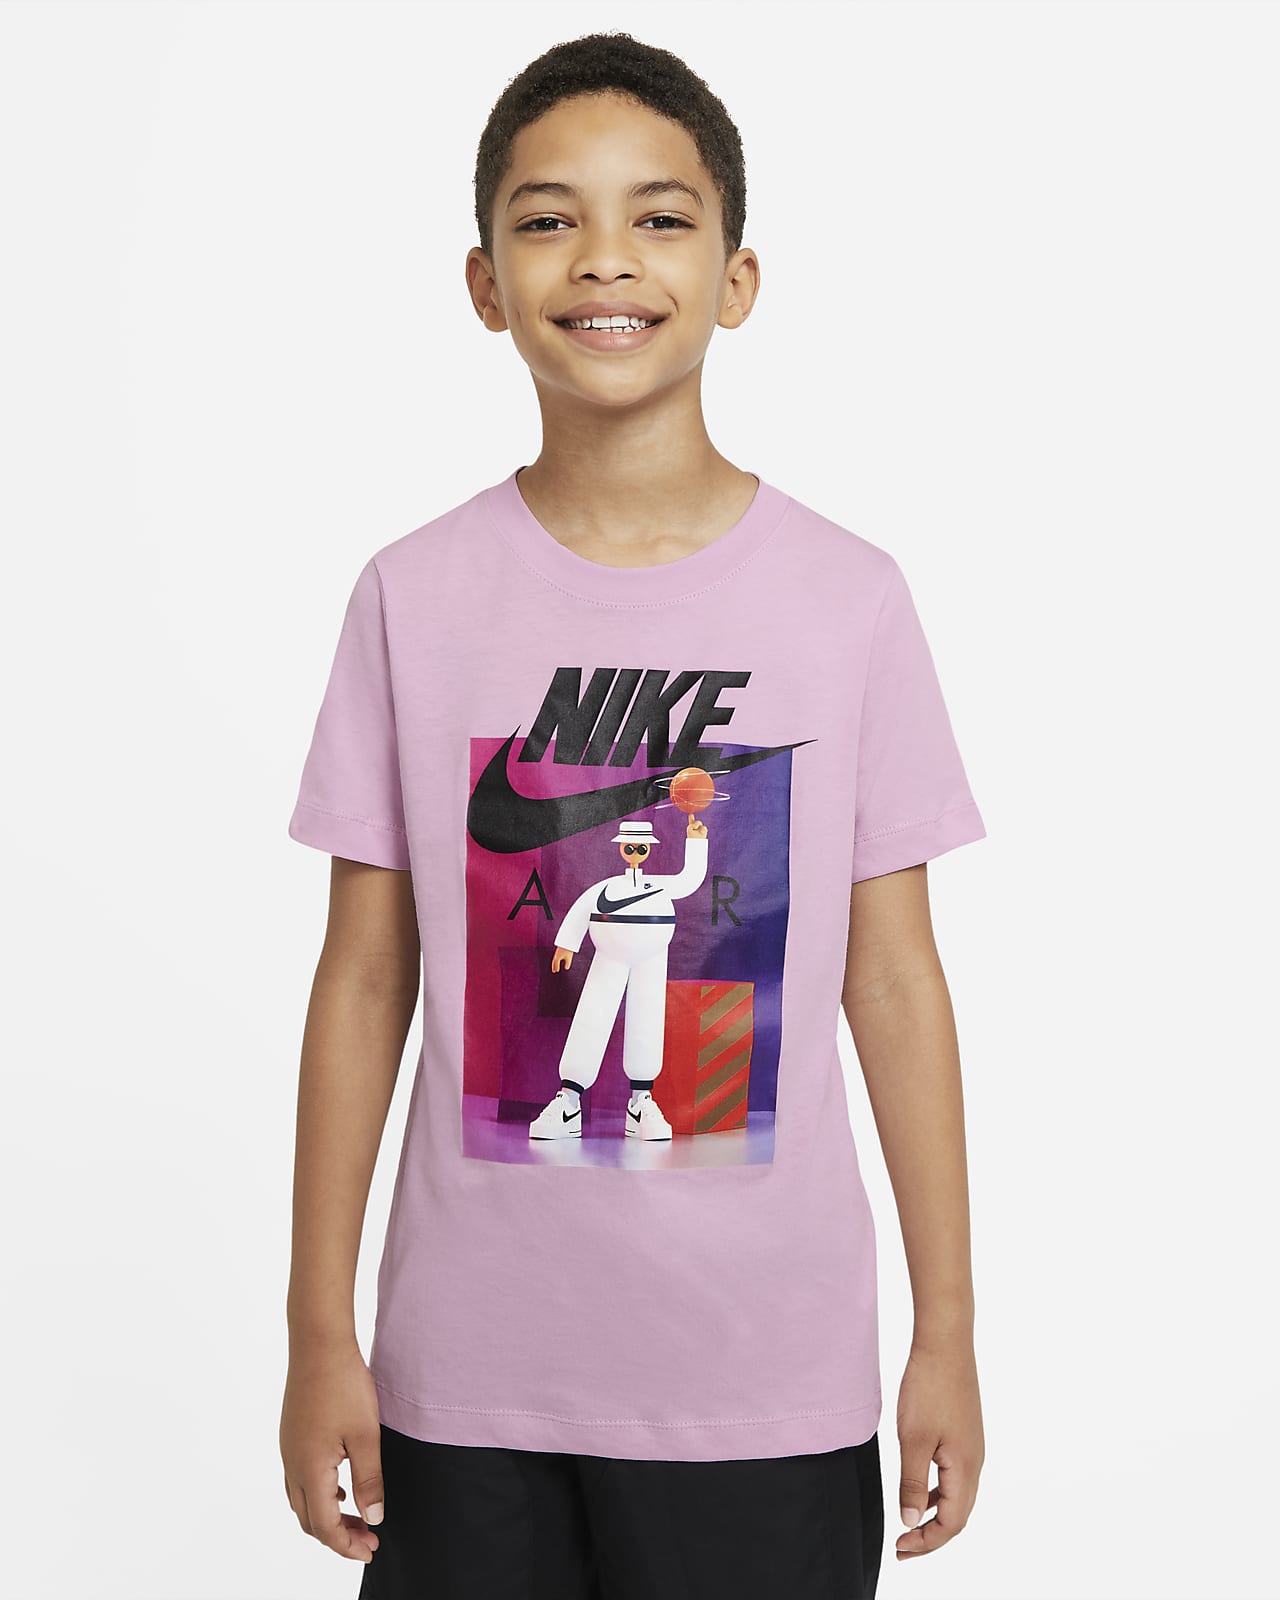 boys purple nike shirt